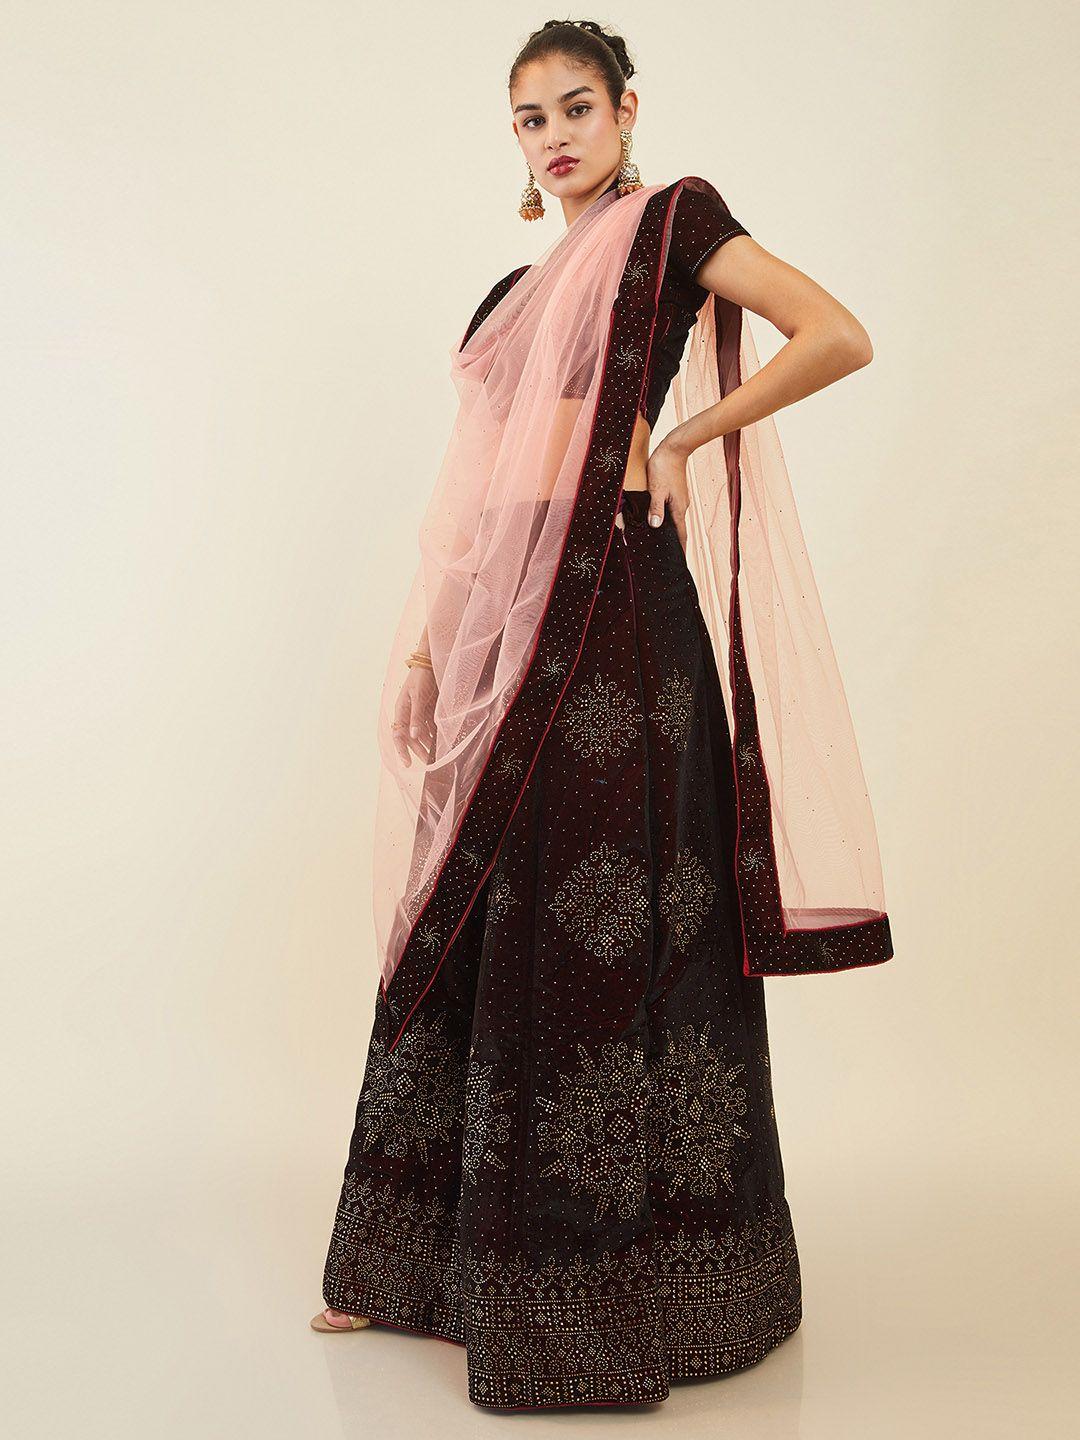 soch embellished velvet unstitched lehenga & blouse with dupatta